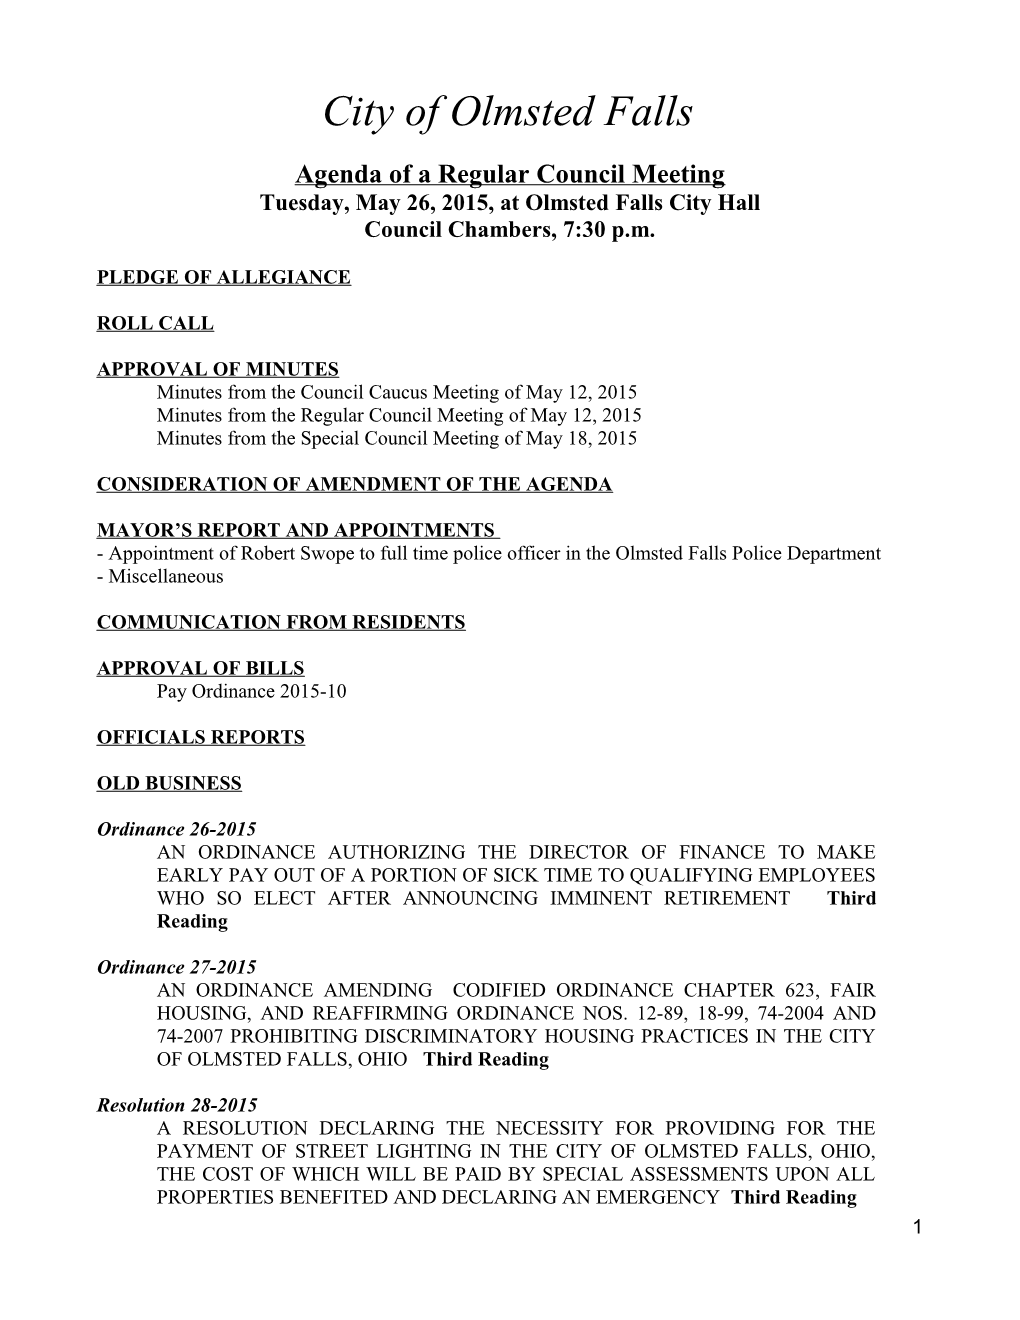 Agenda of a Regular Council Meeting